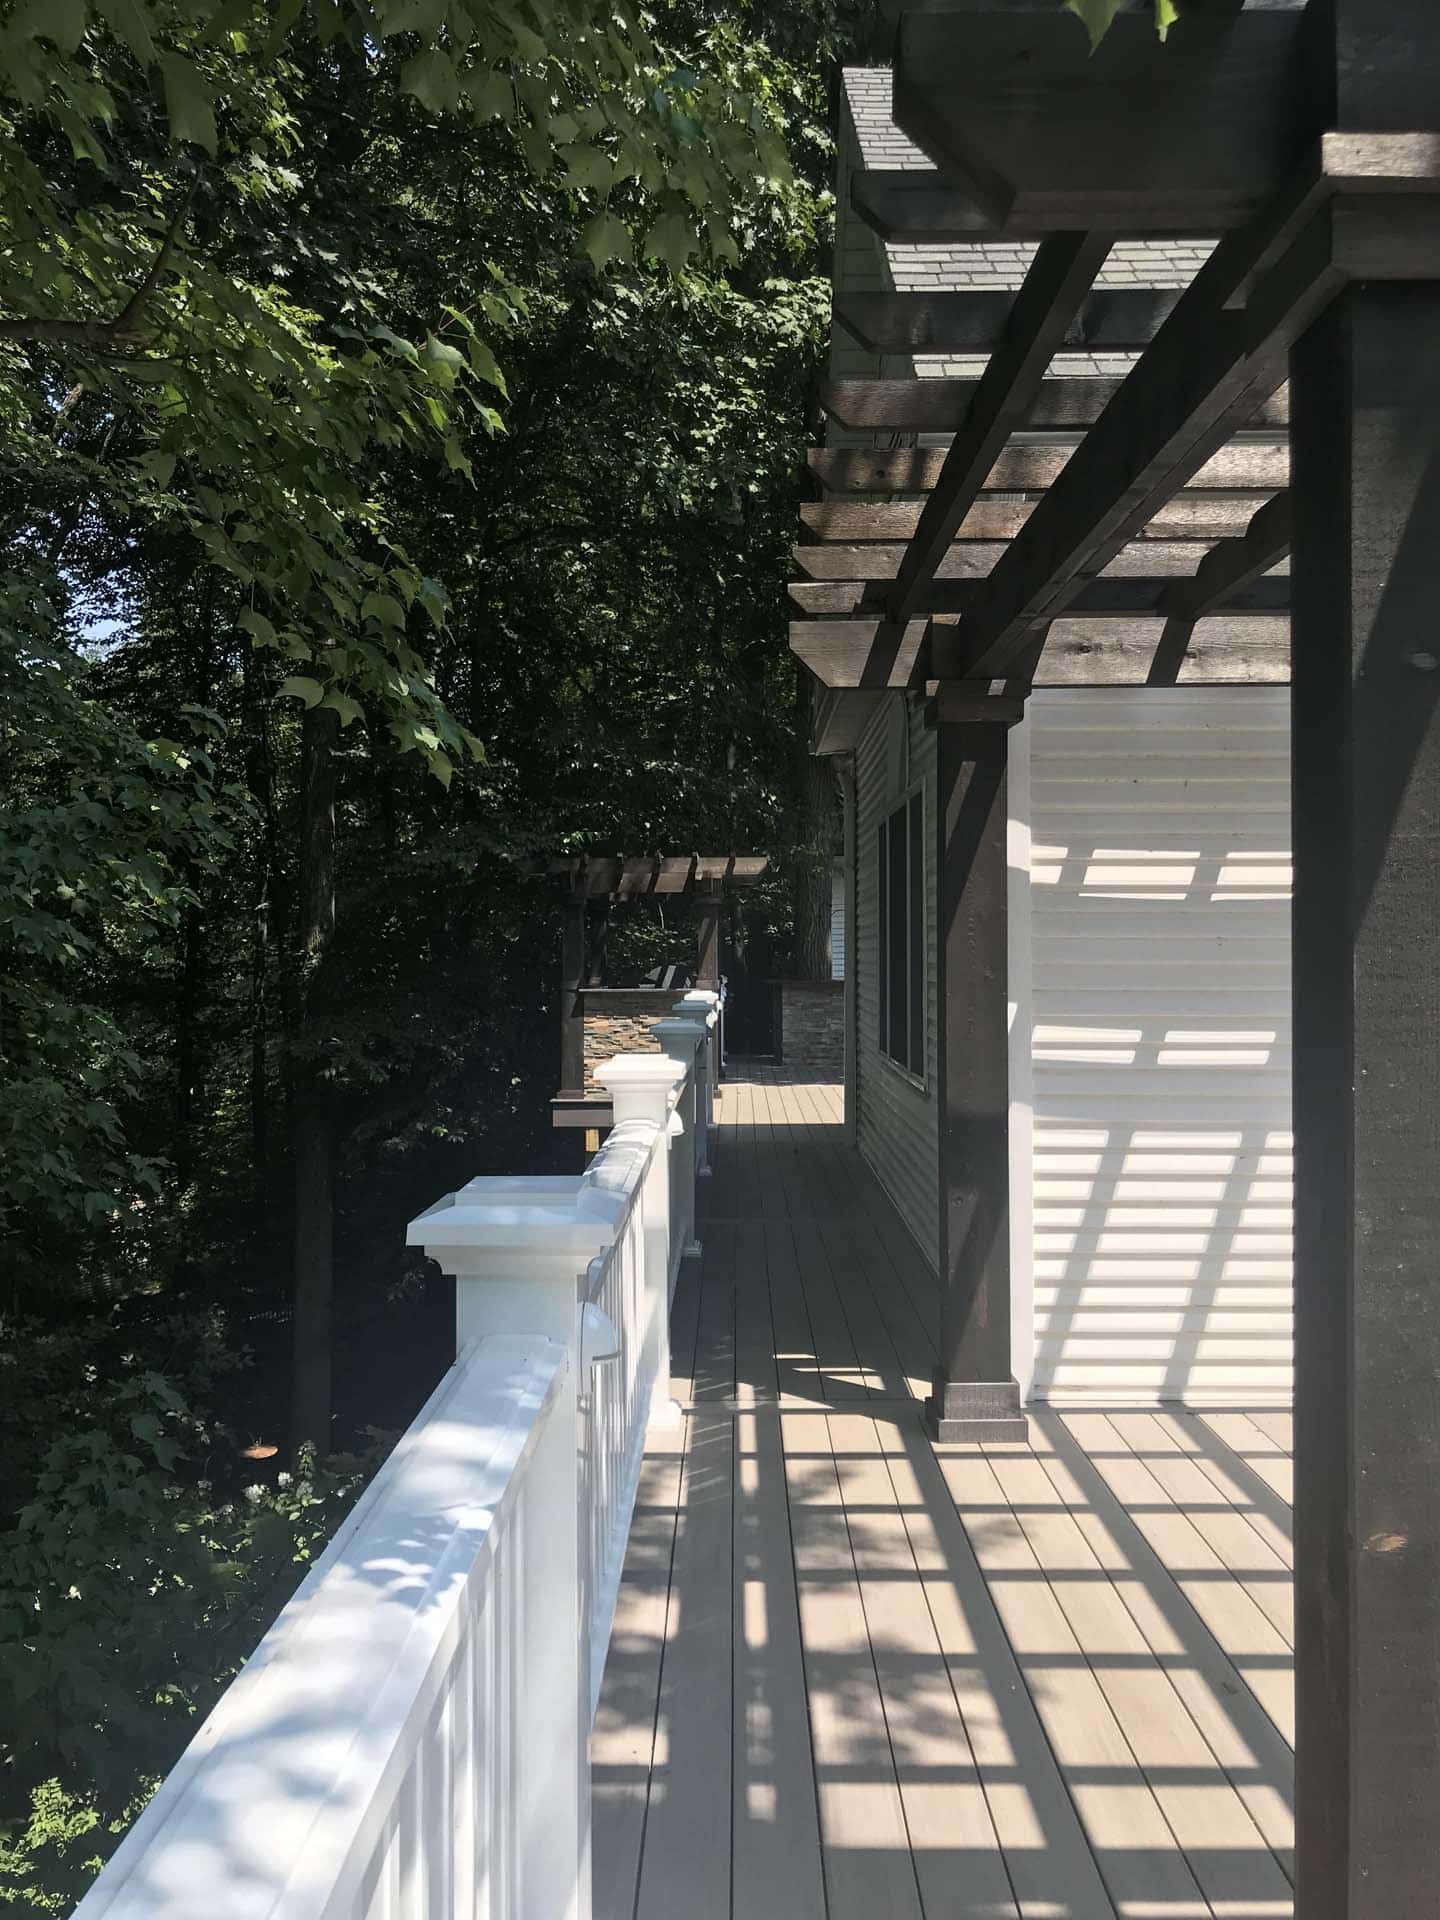 porch area with white railing, black pergola